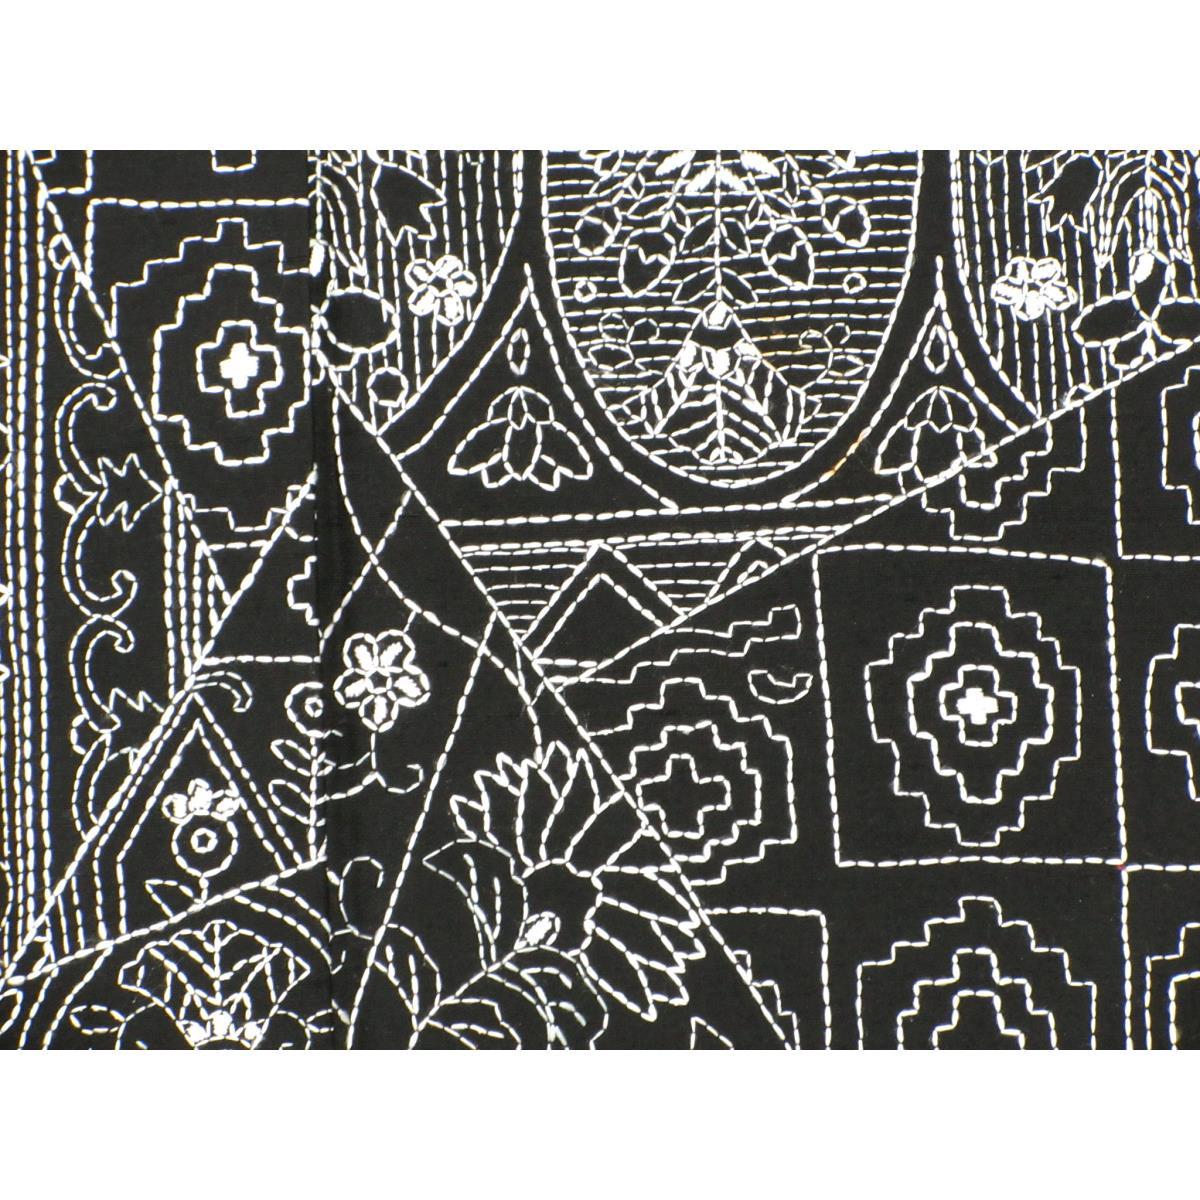 Tsumugi Ogasa embroidery